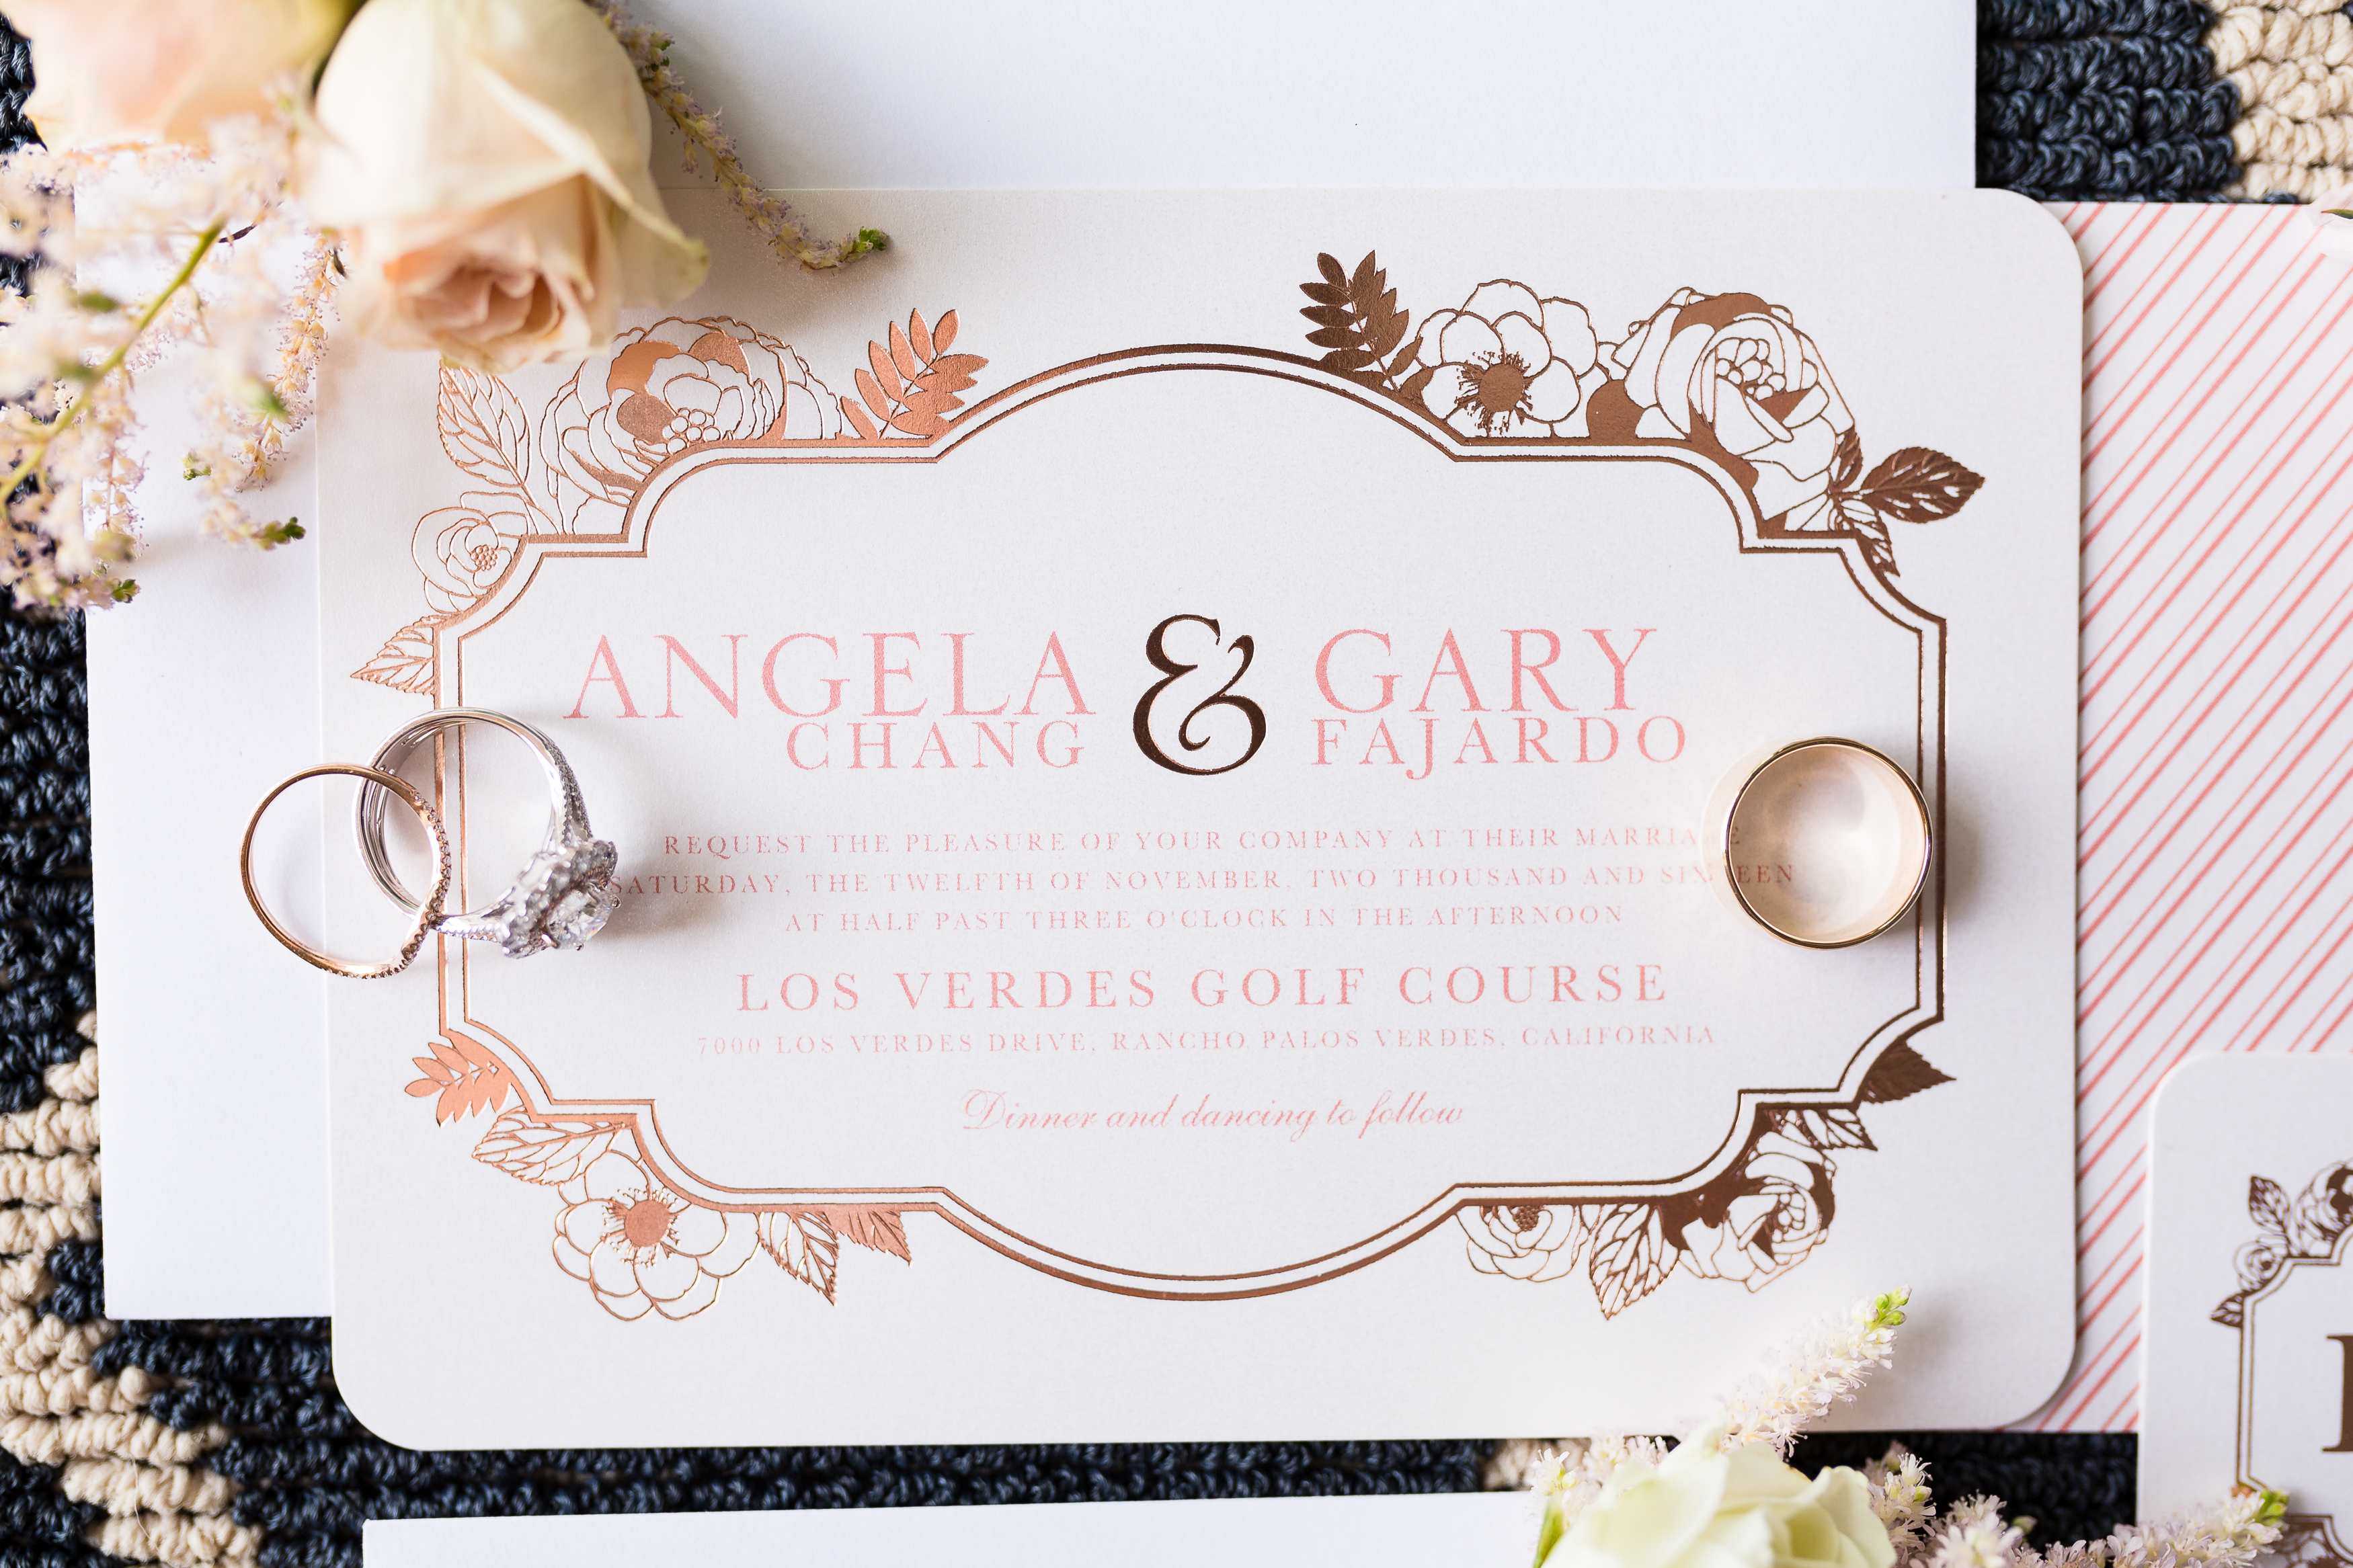 Palos Verdes Golf Course Wedding Invitation